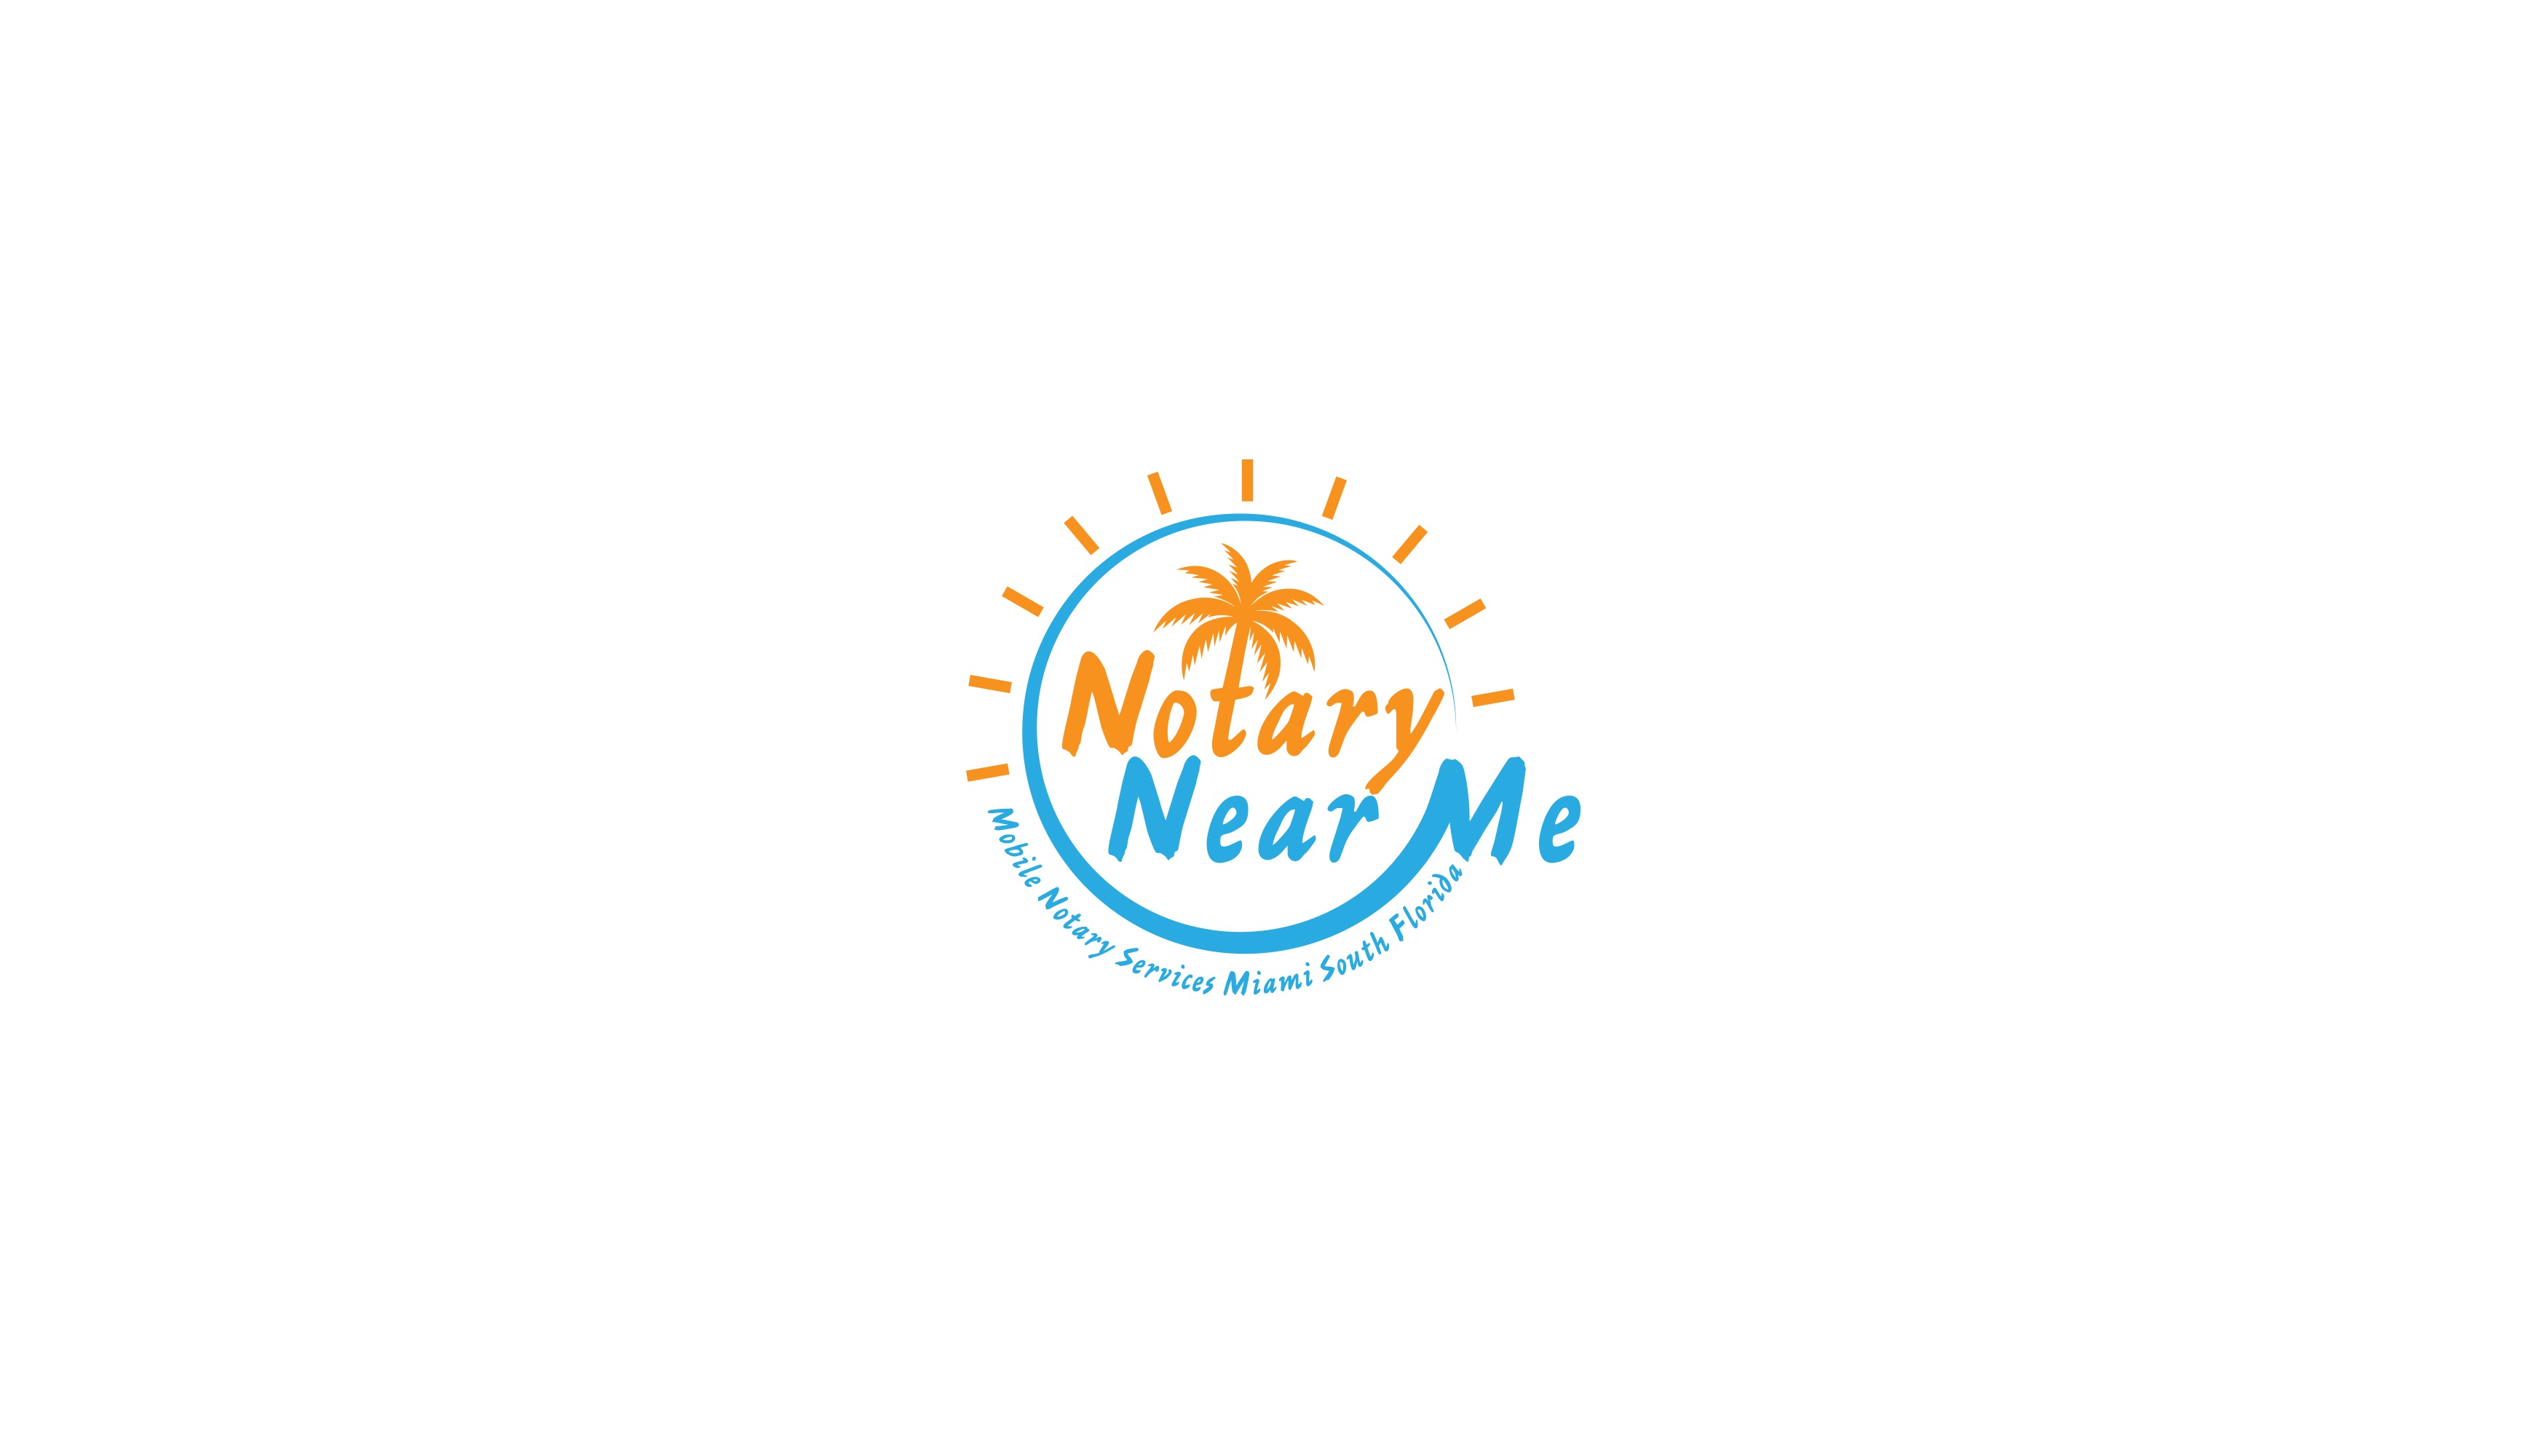 Mobile Notary Miami South Florida